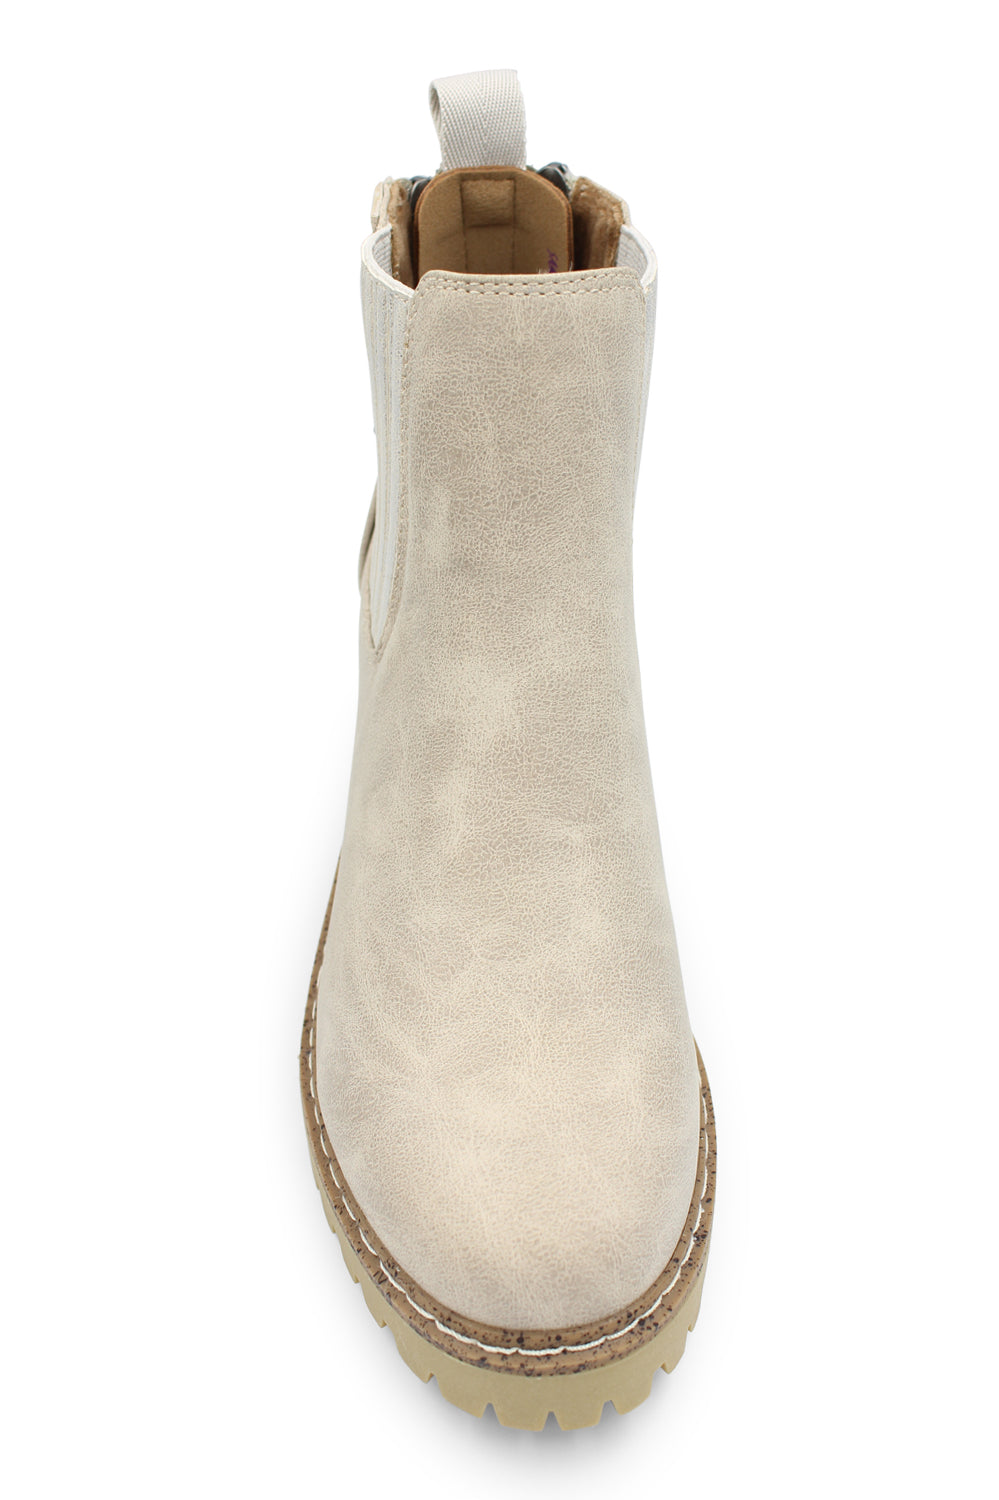 Layten Heel Boots in White Sands    Shoes Blowfish Malibu- Tilden Co.